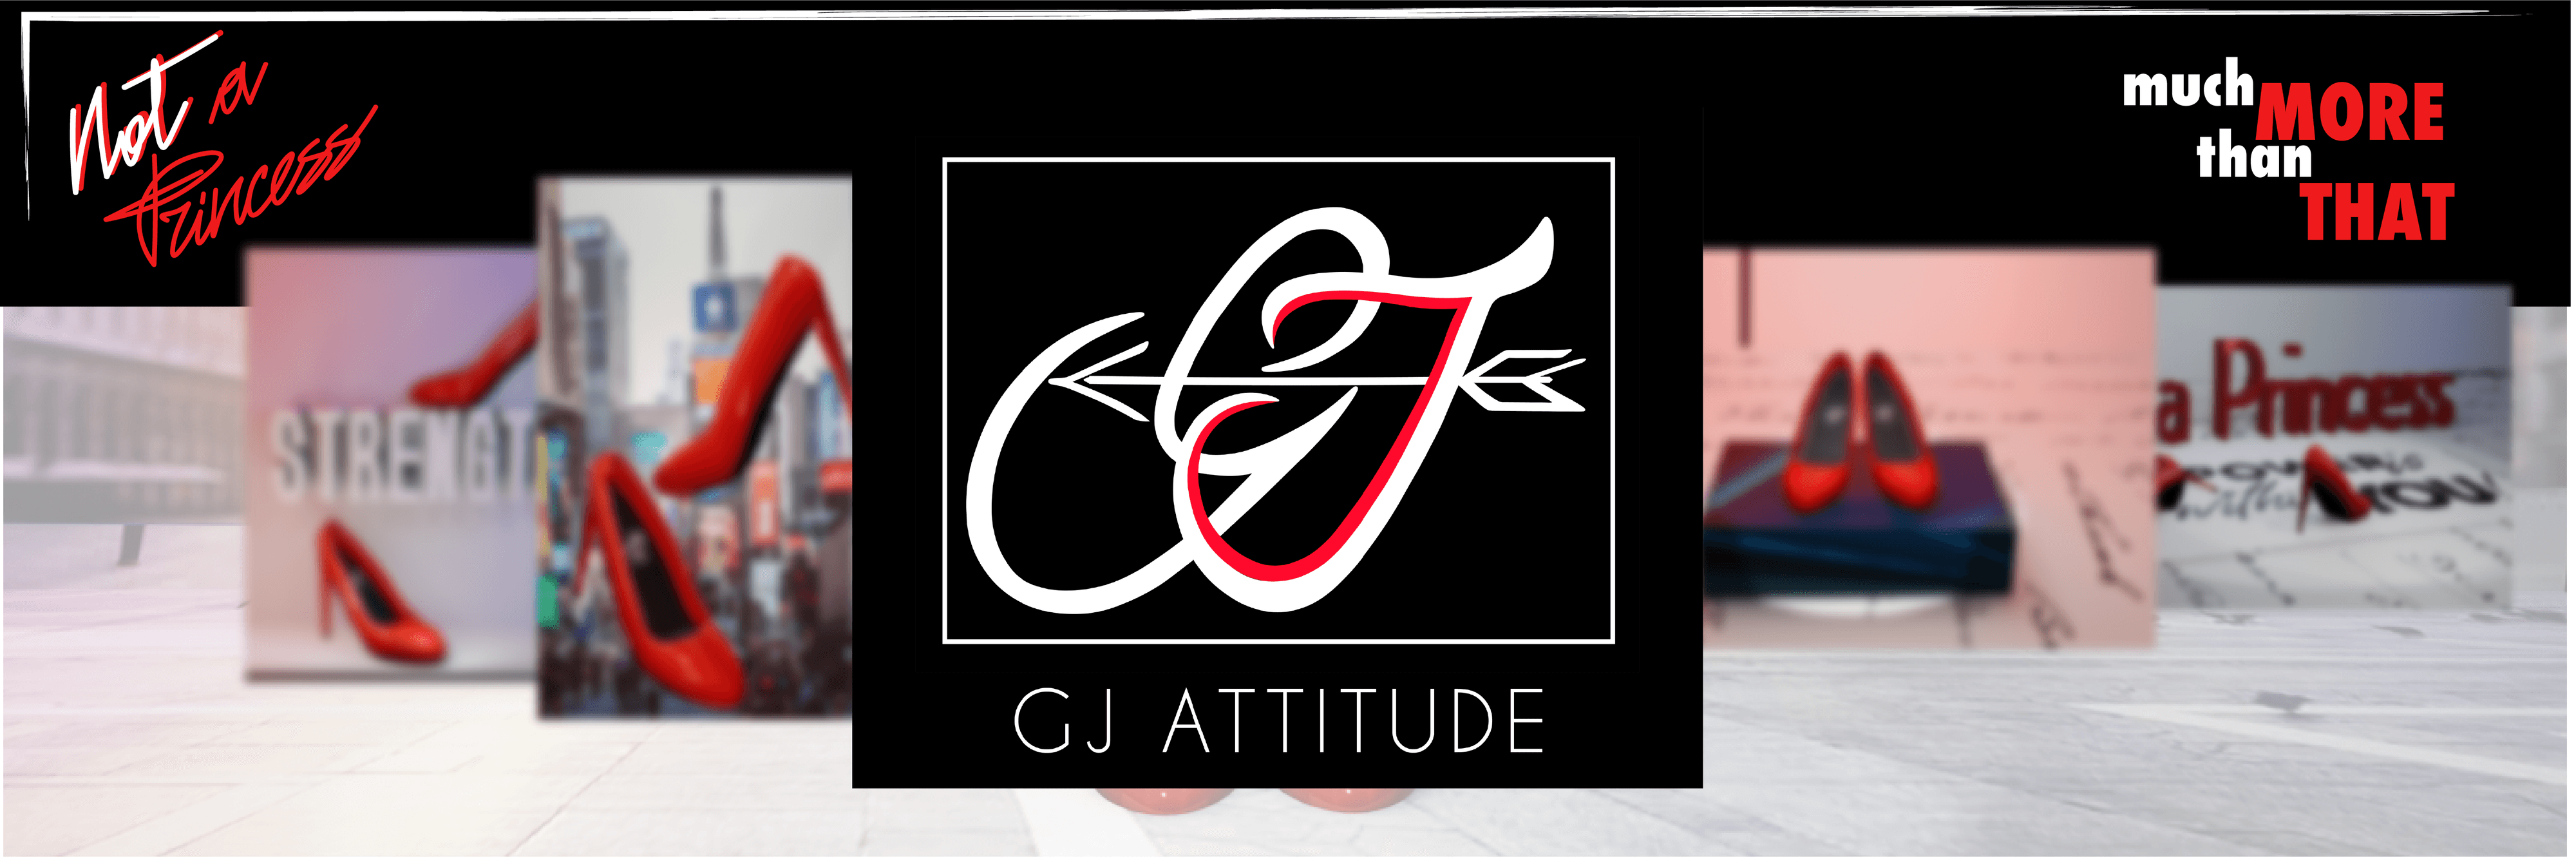 Gj_Attitude 橫幅